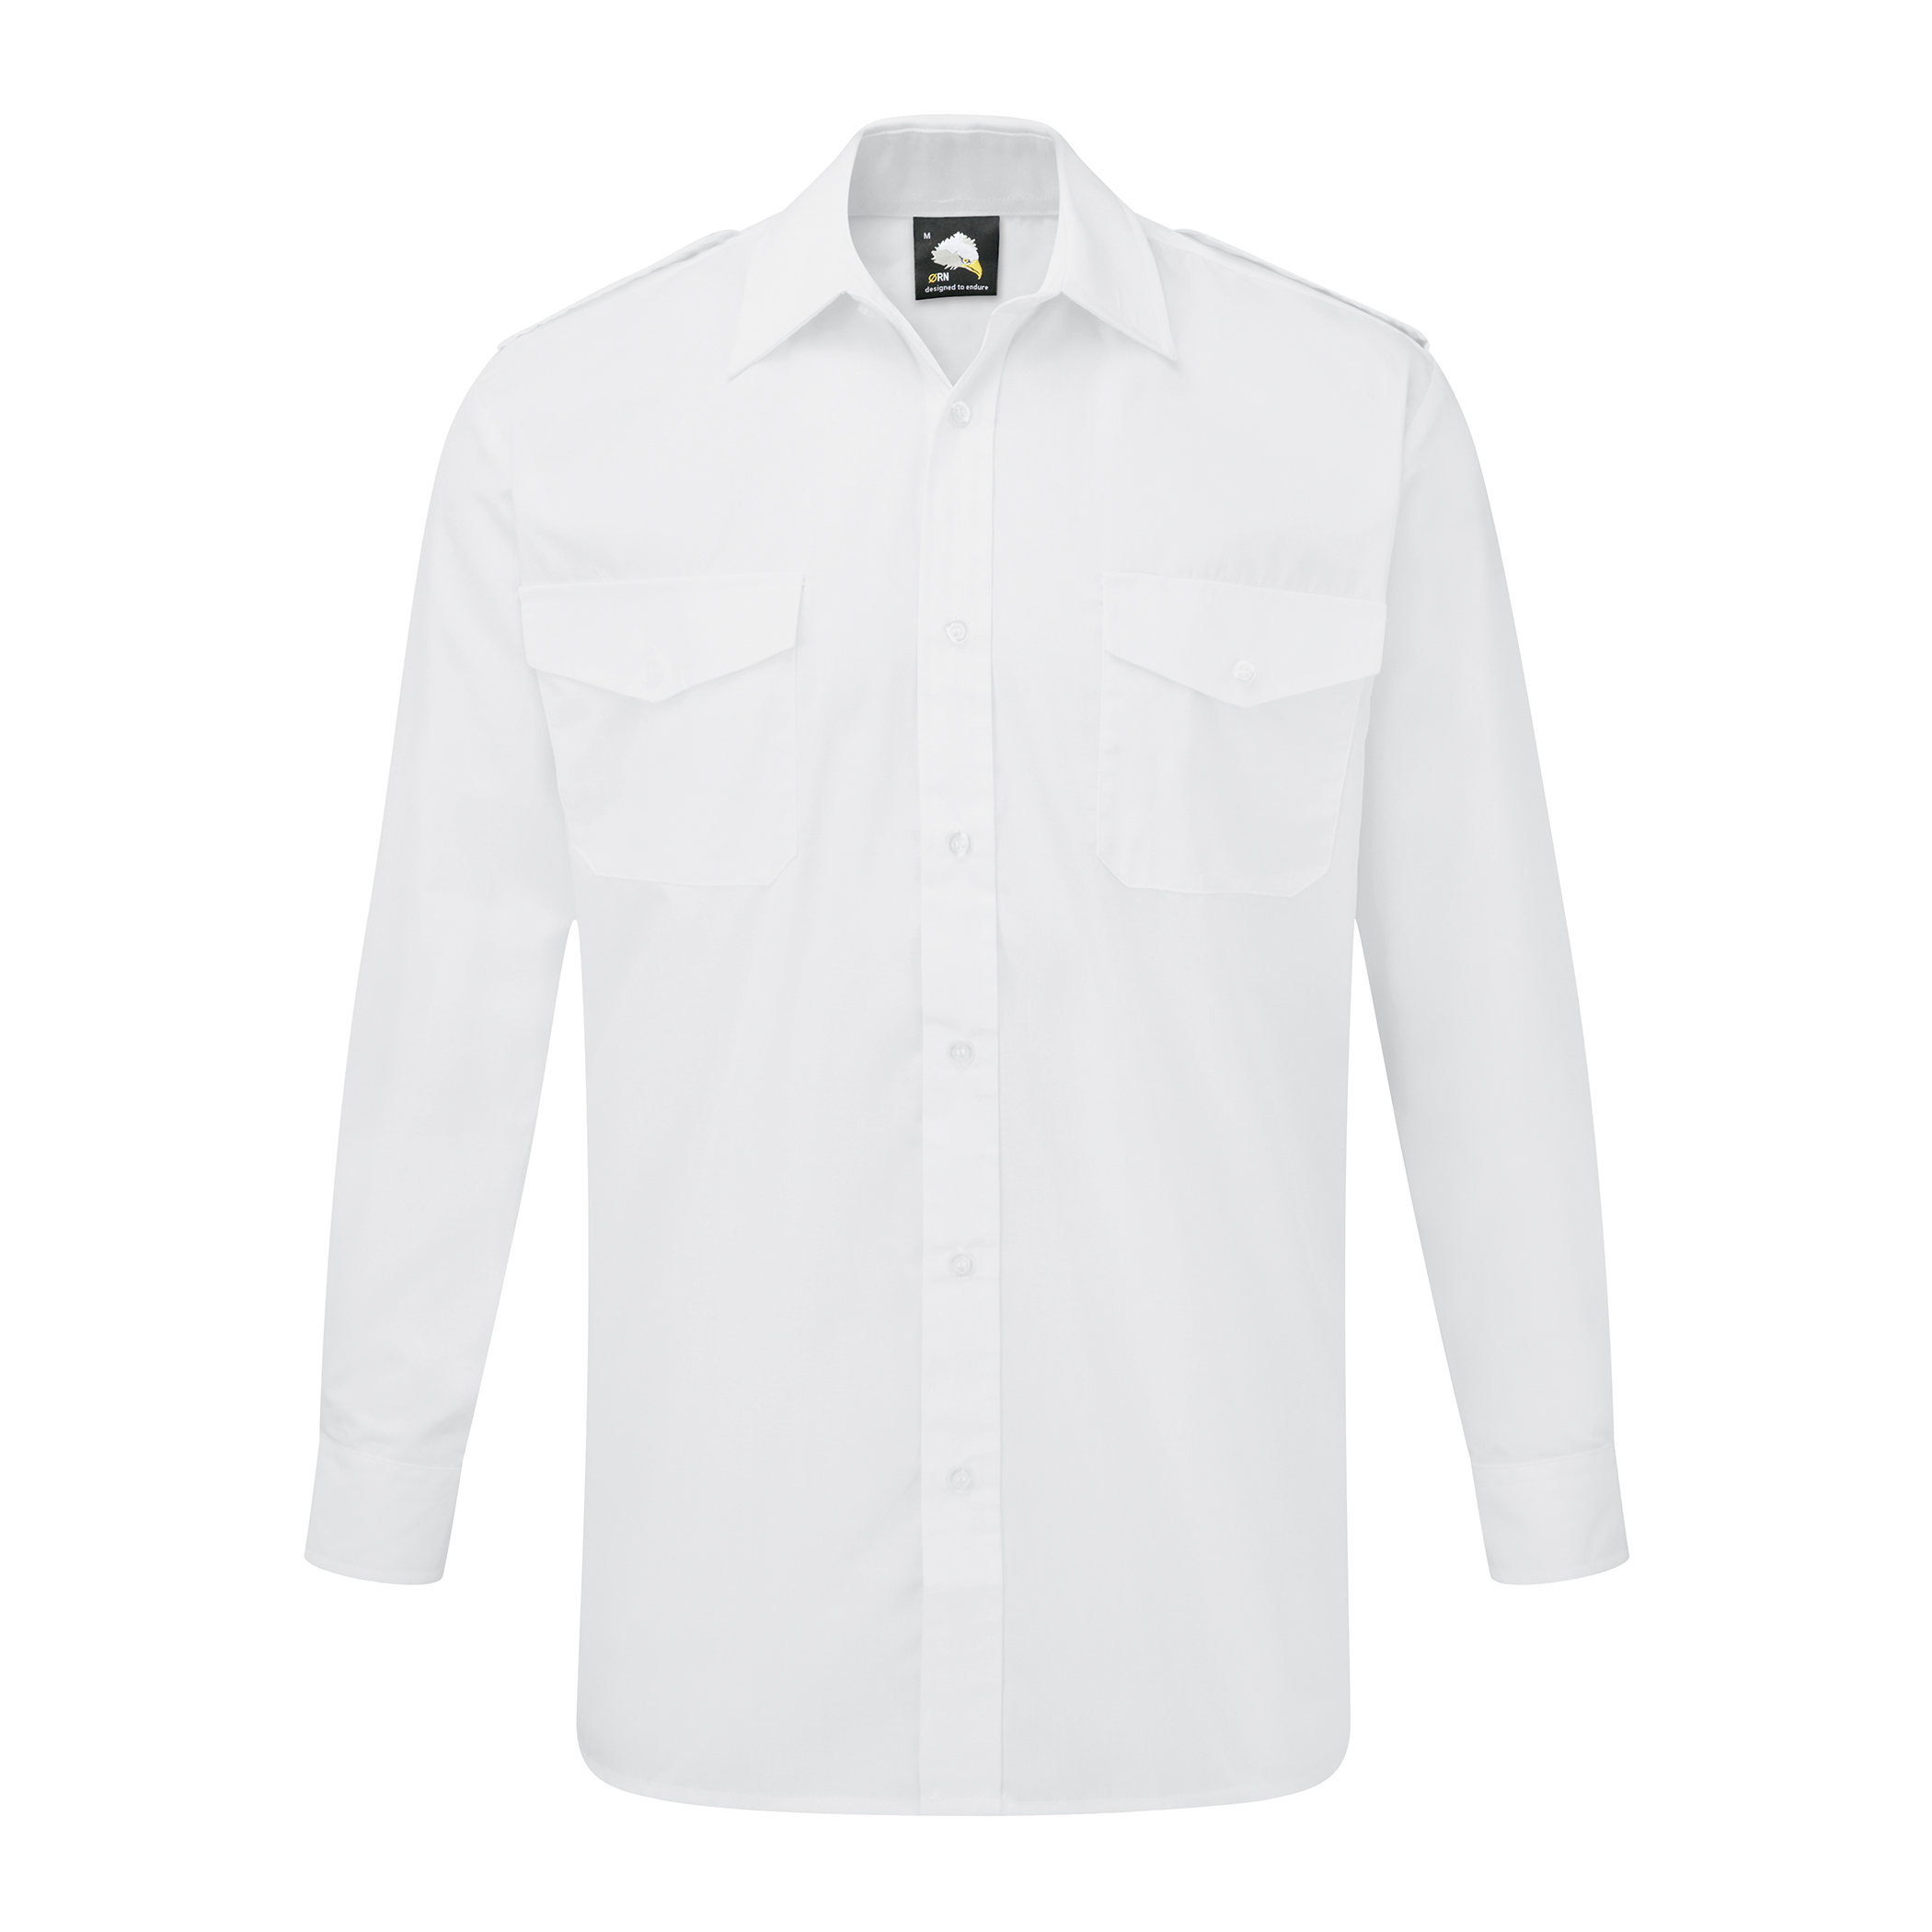 Essential L/S Pilot Shirt - 14.5 - White